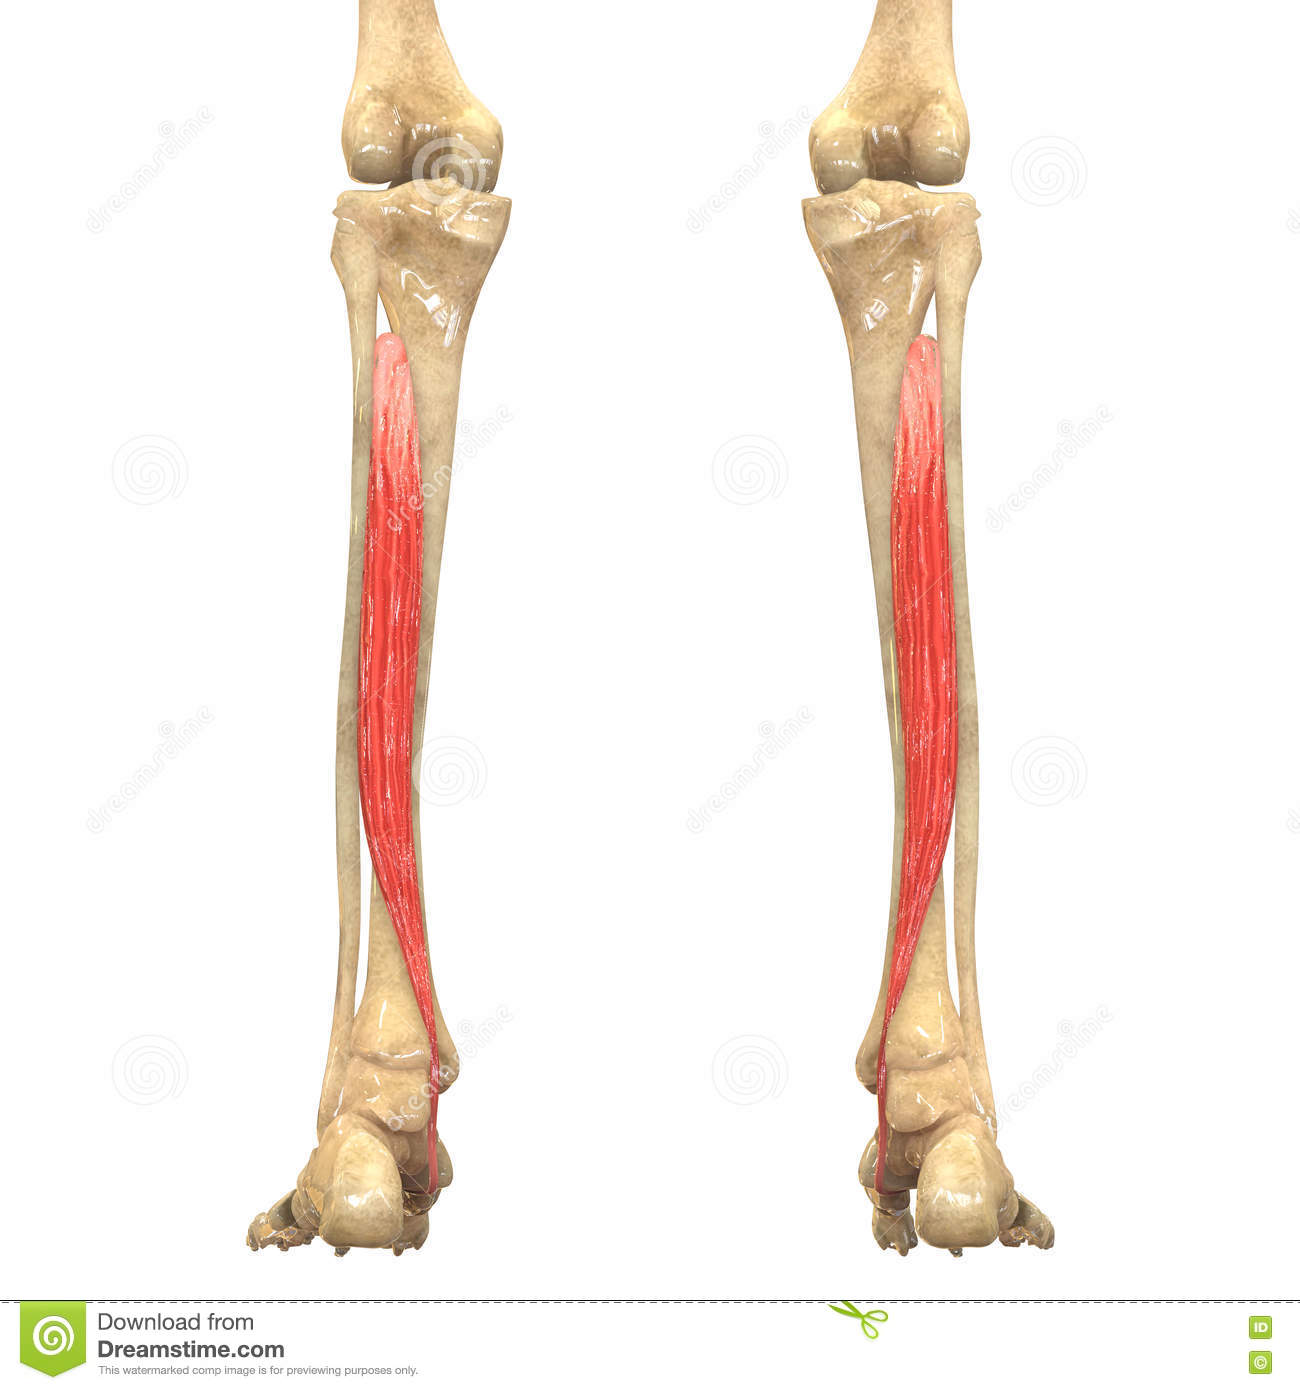 human-body-muscles-anatomy-tibialis-posterior-d-illustration-75784901.jpg